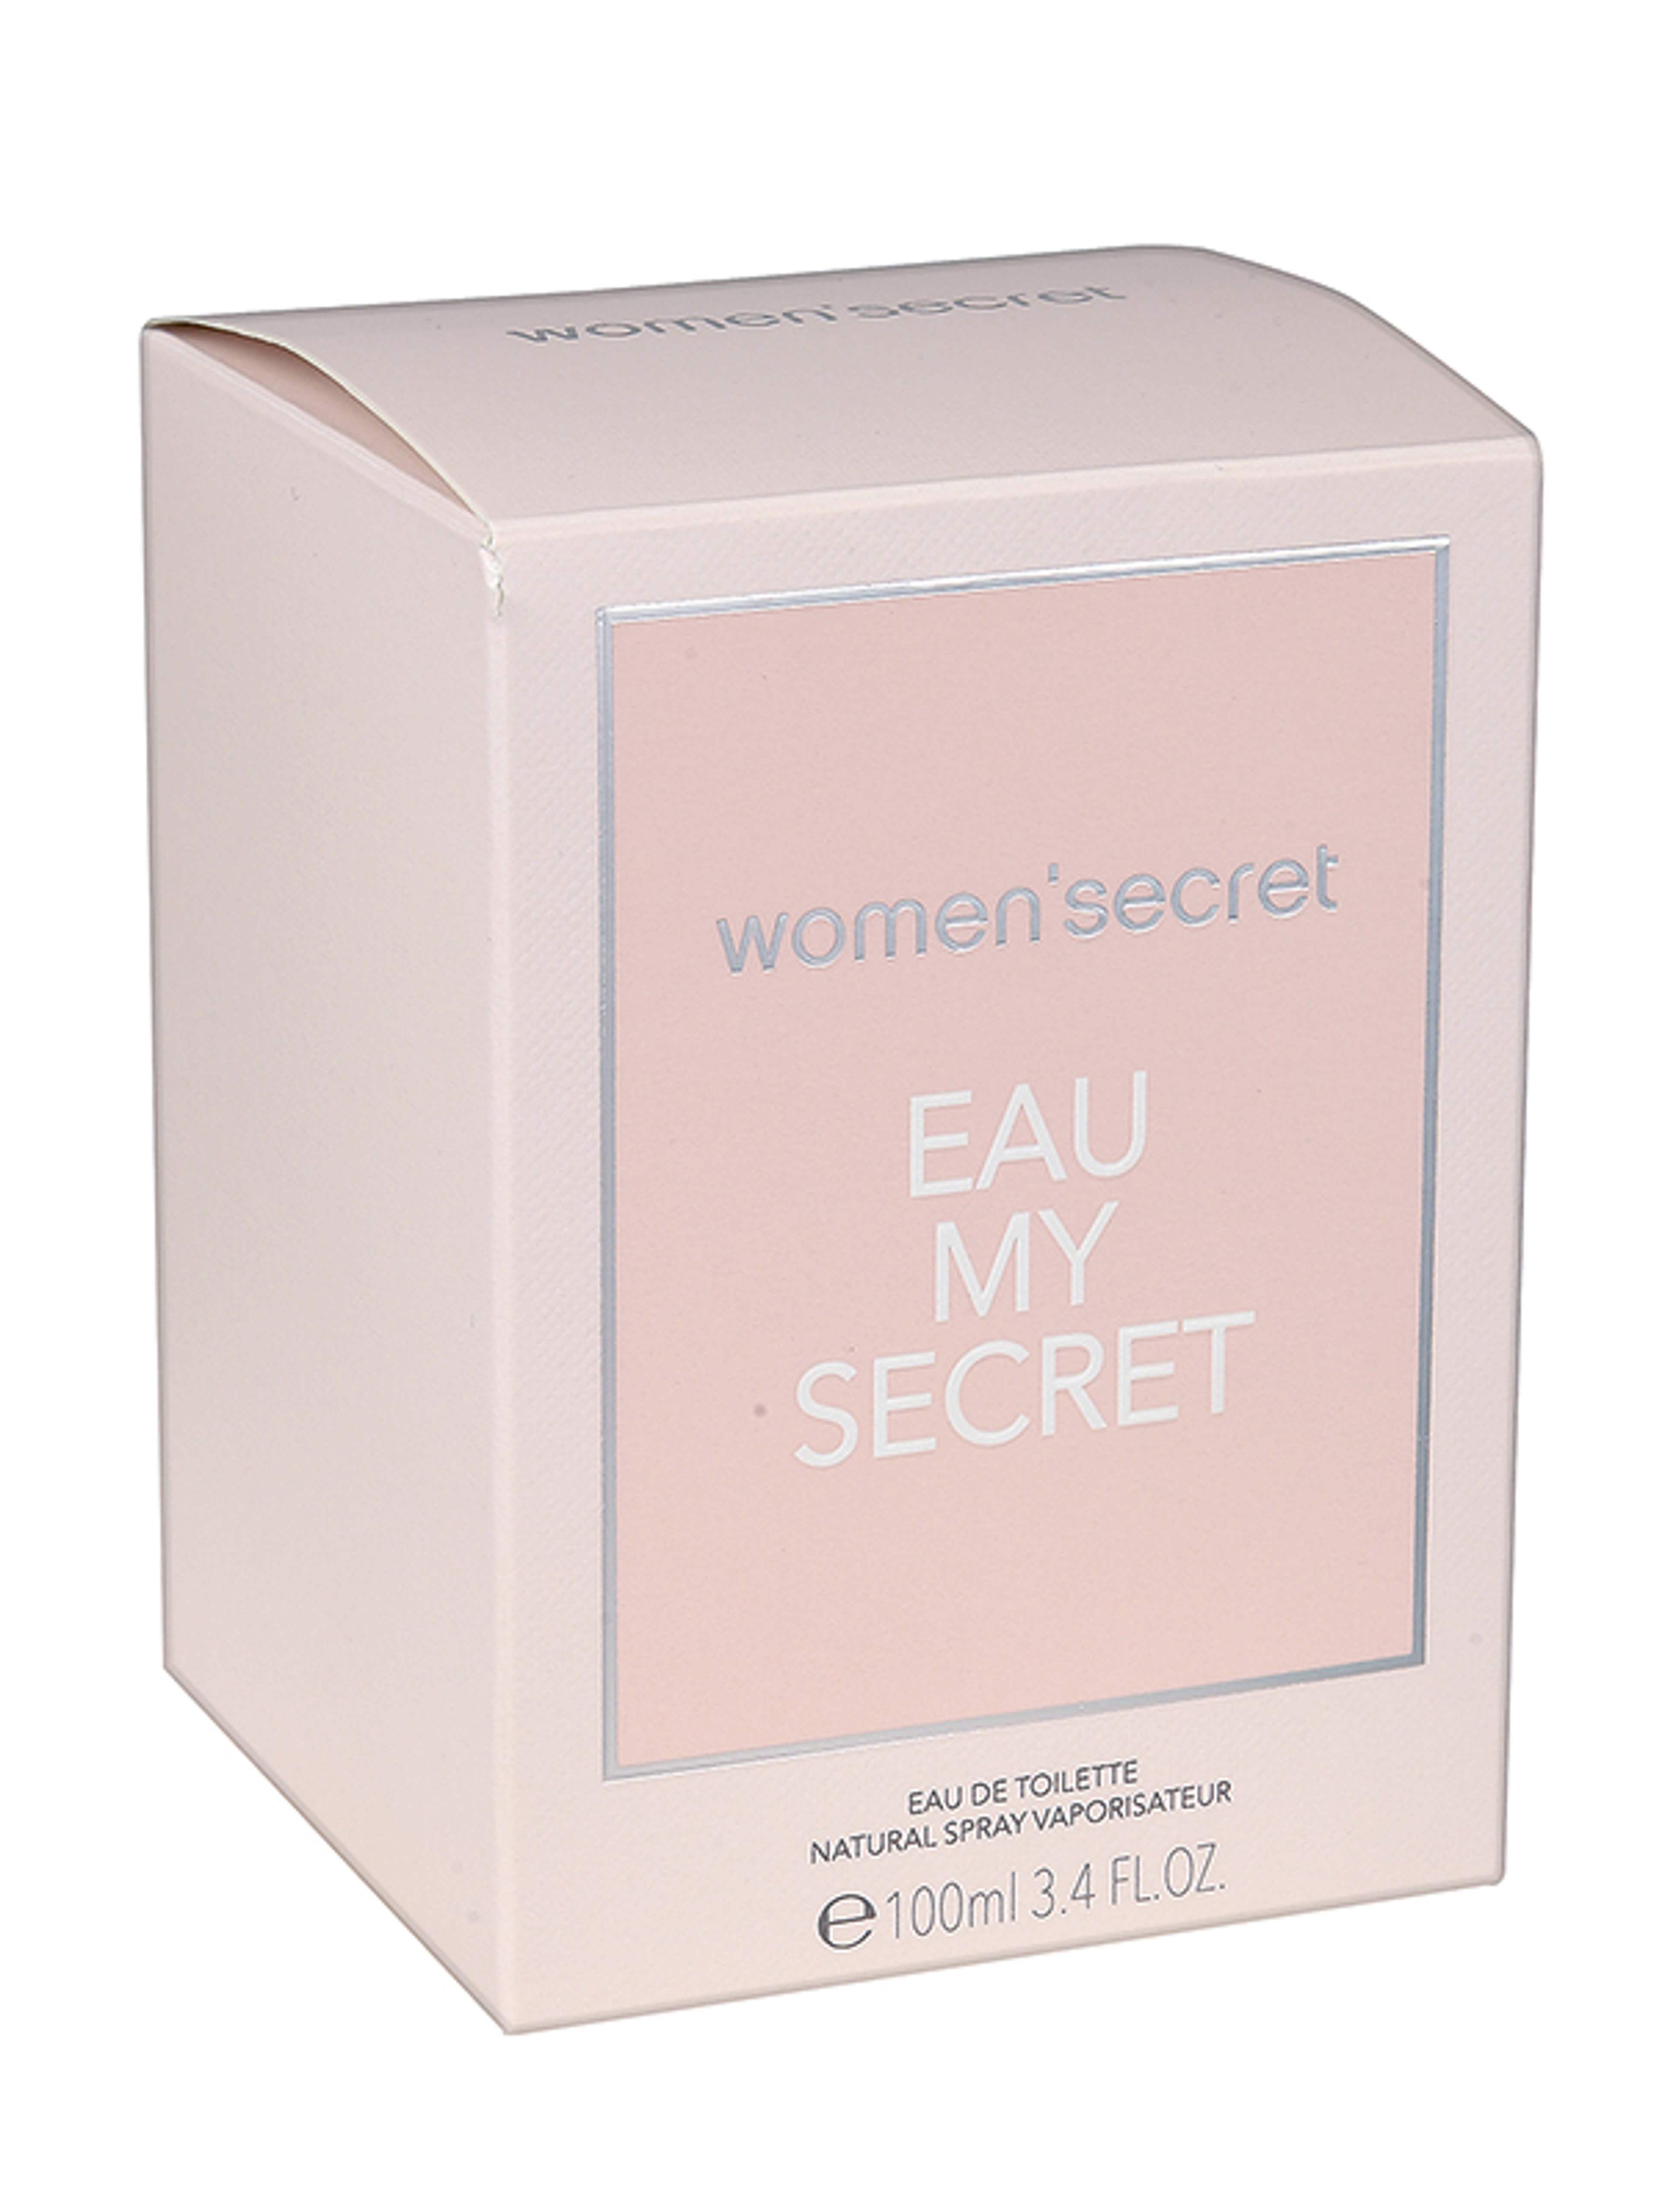 Women'secret Eau My Secret Eau de Toilette - 100 ml-1